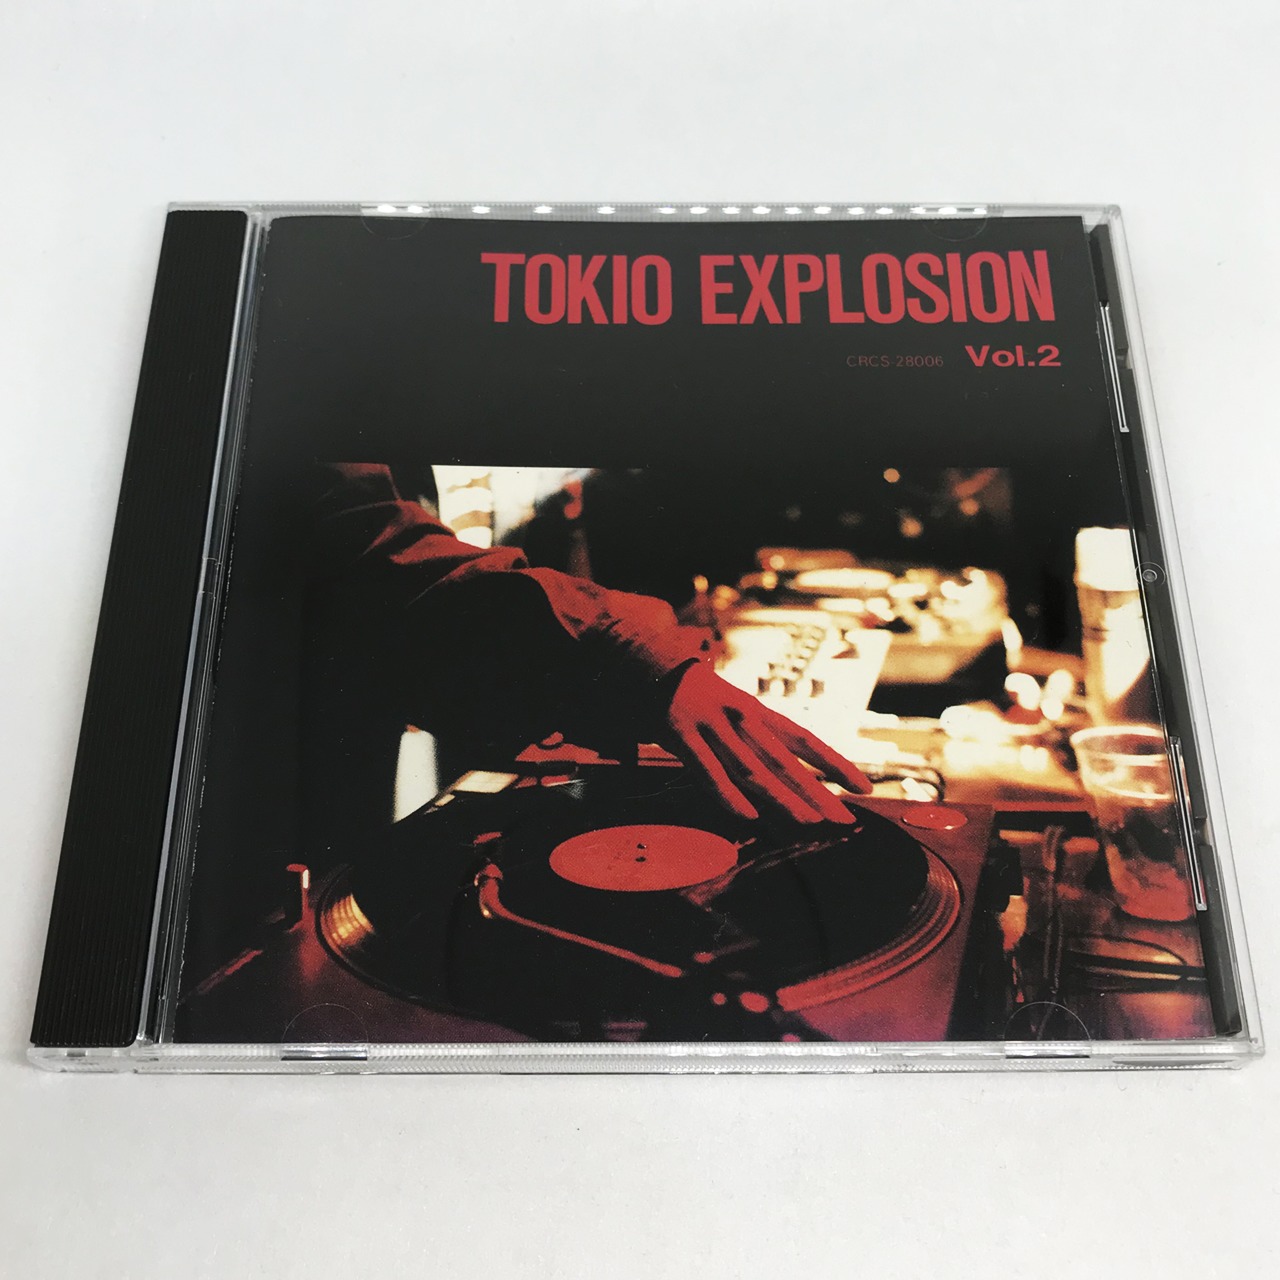 Tokio Explosion Vol.2